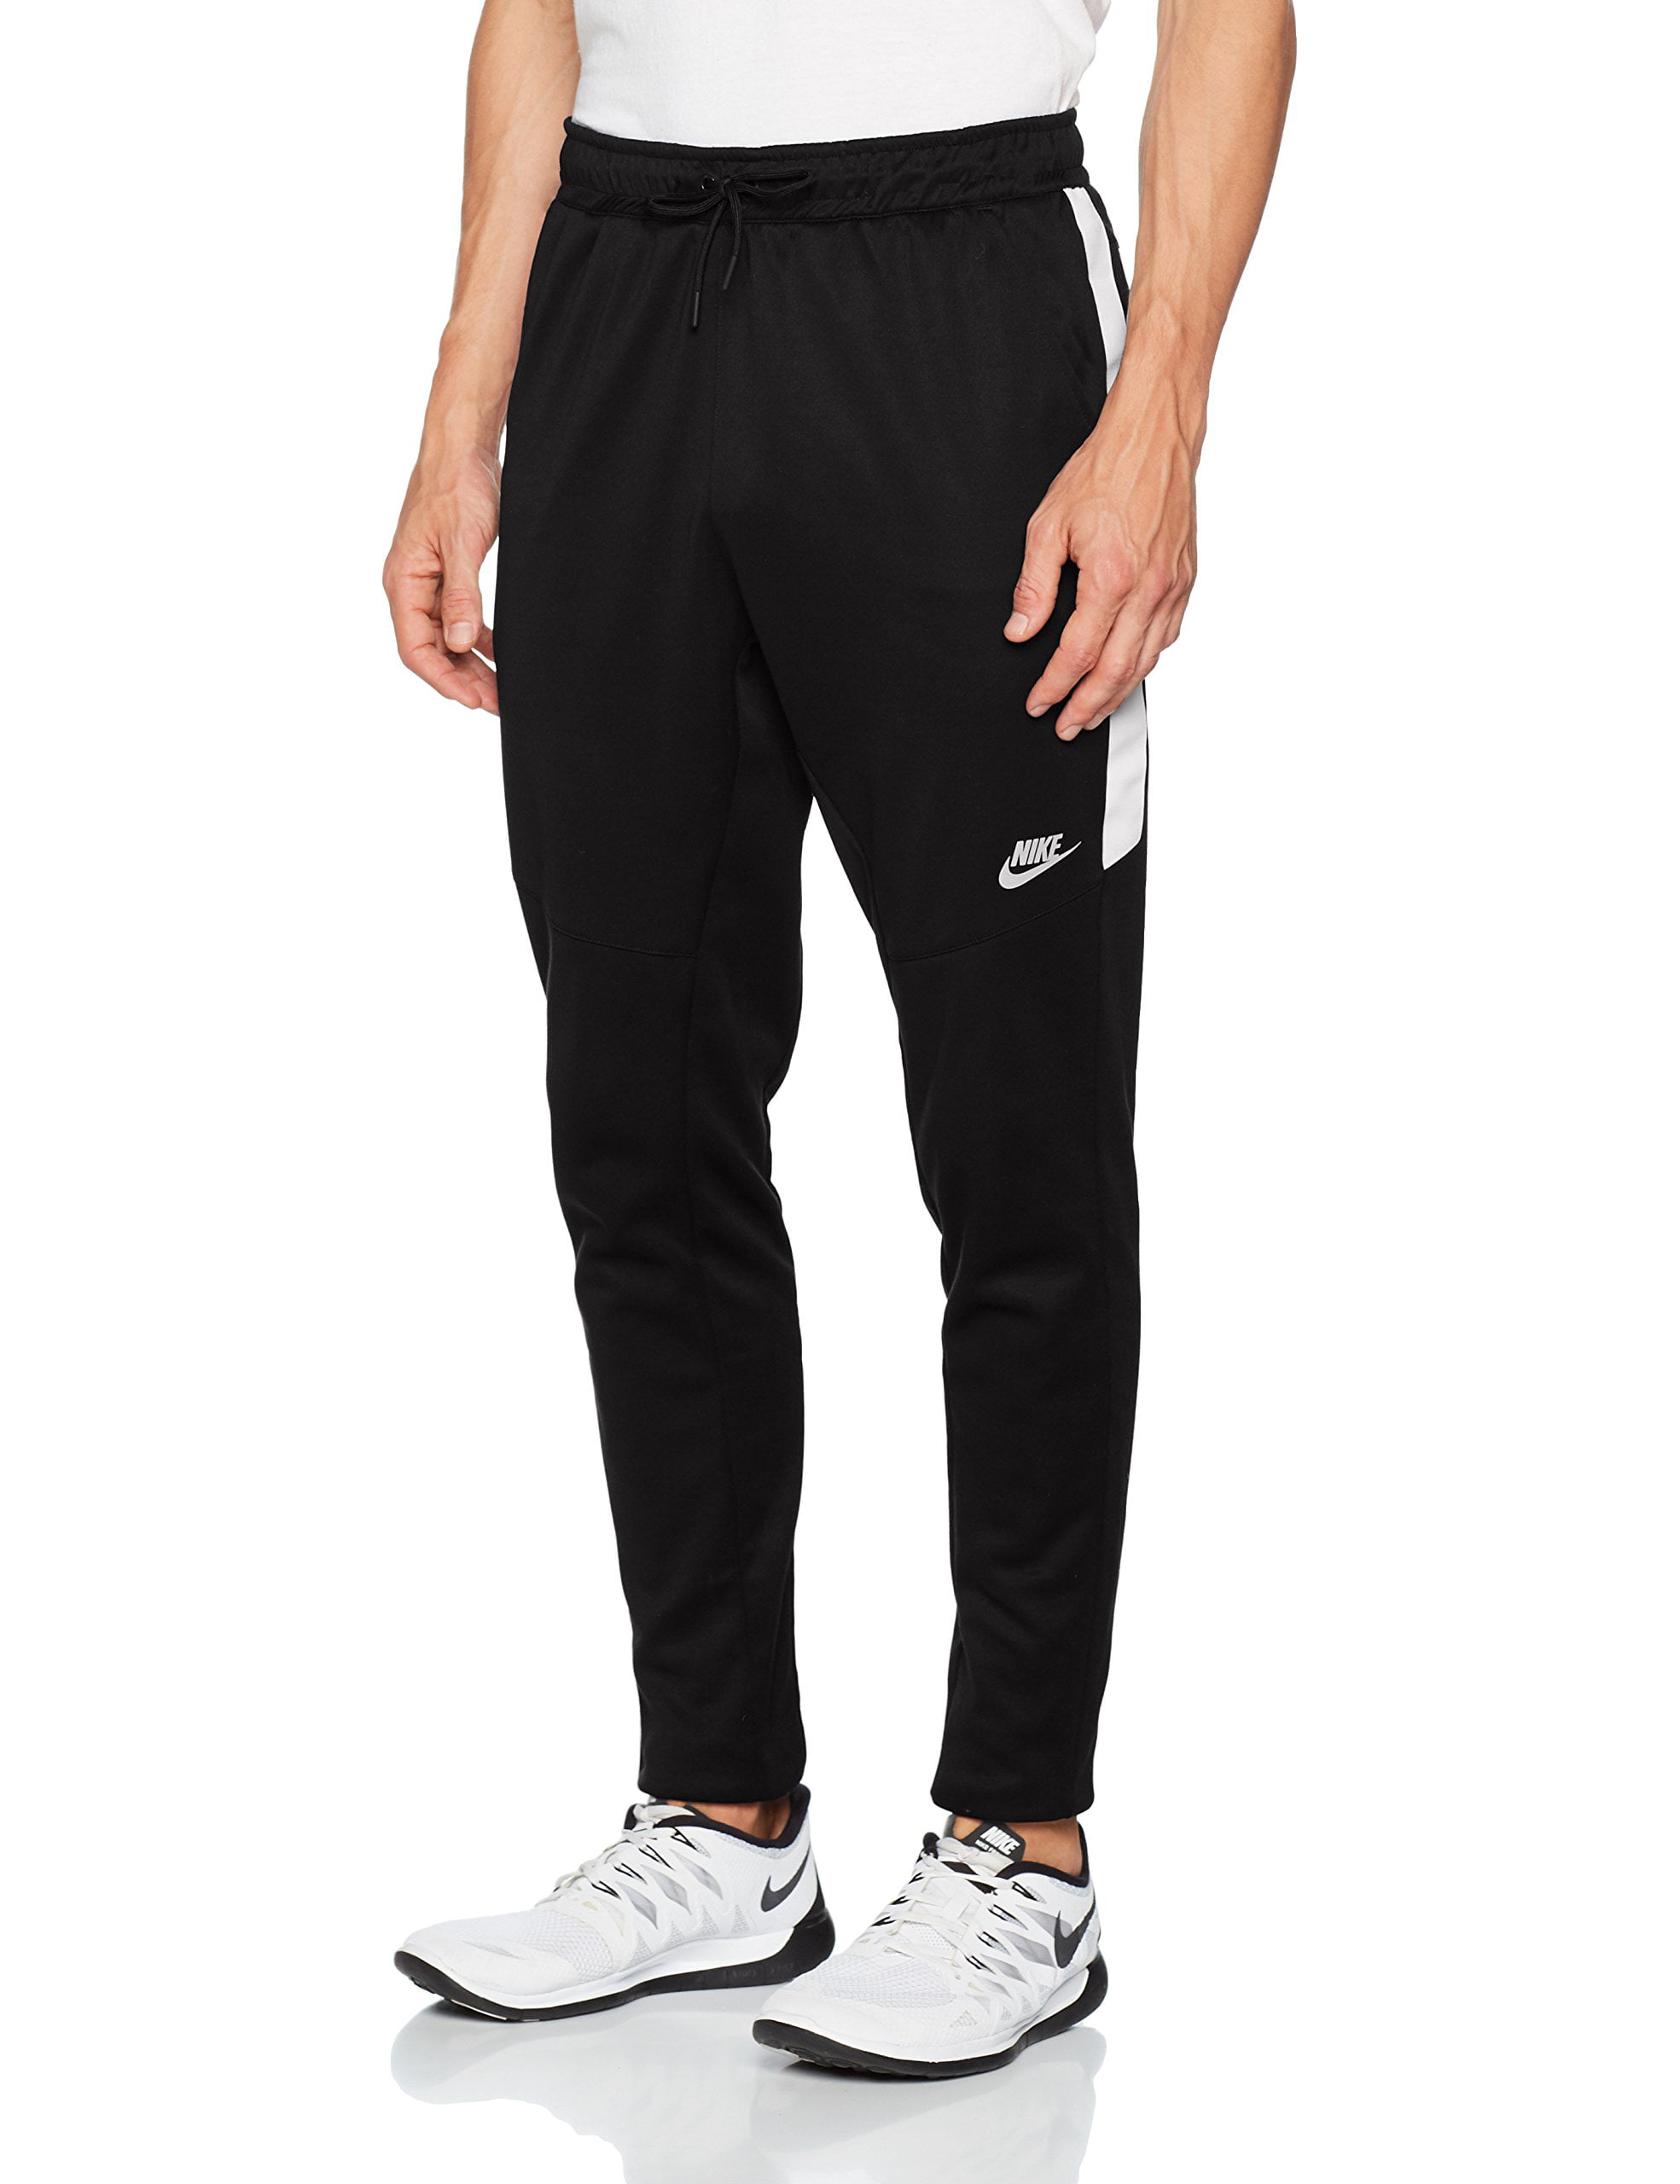 Nike - nike tribute pants - men's - Walmart.com - Walmart.com